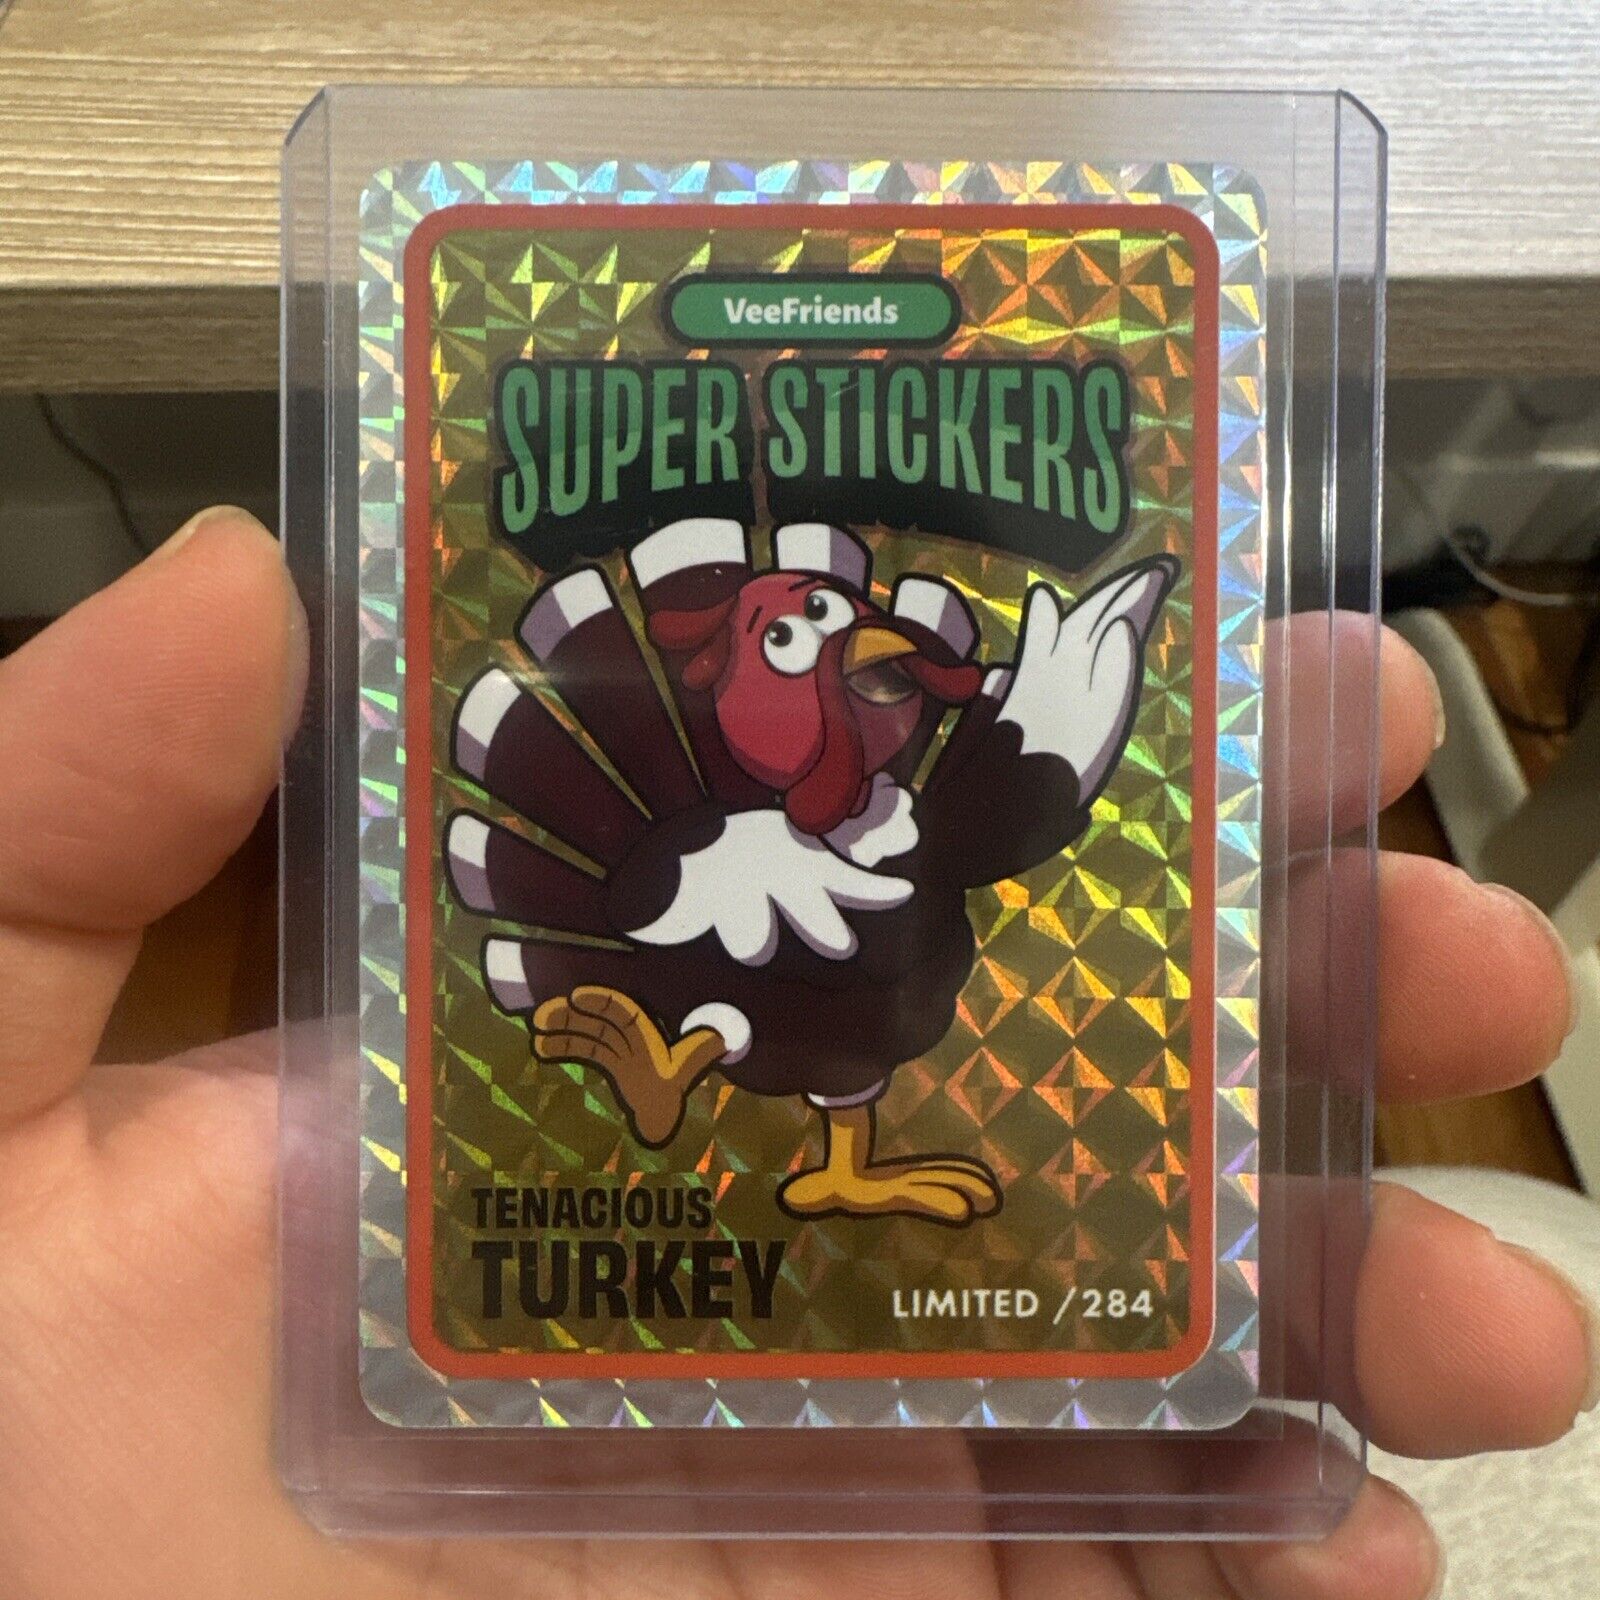 VeeFriends Super Stickers Tenacious Turkey Limited  /284 Gold Ice